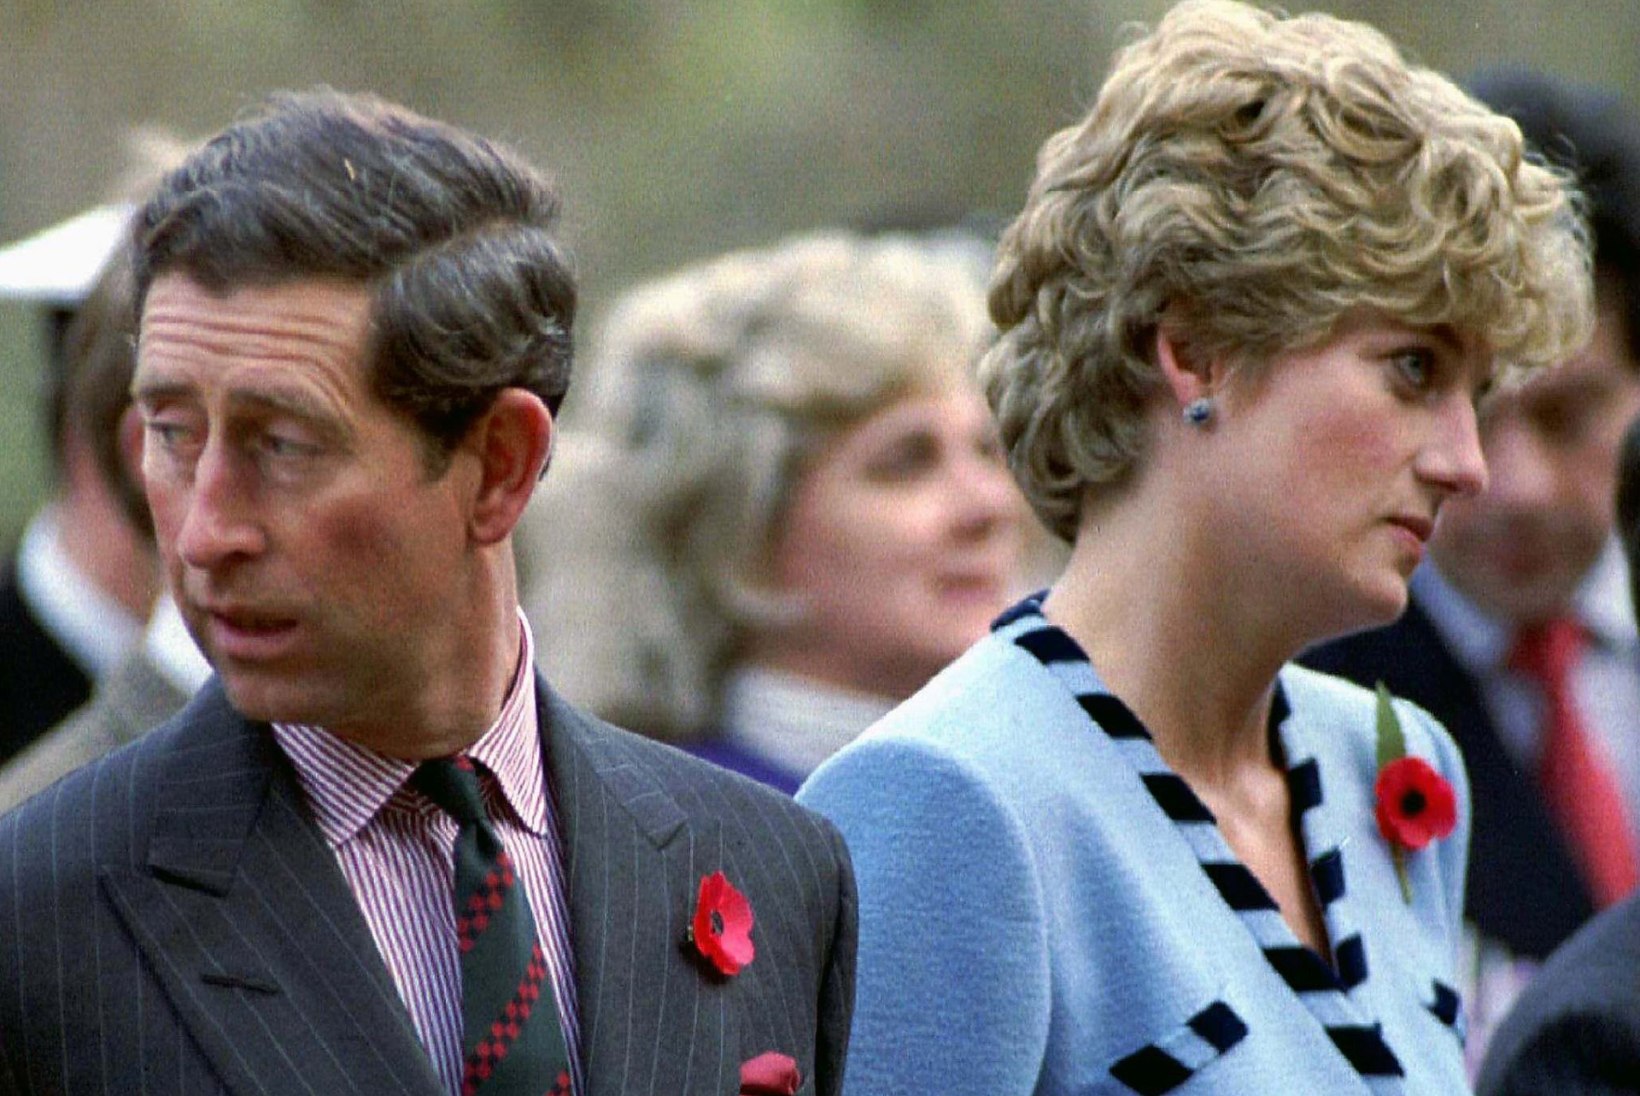 Kas prints Charles kahetses, et Dianaga nii ruttu abiellus?